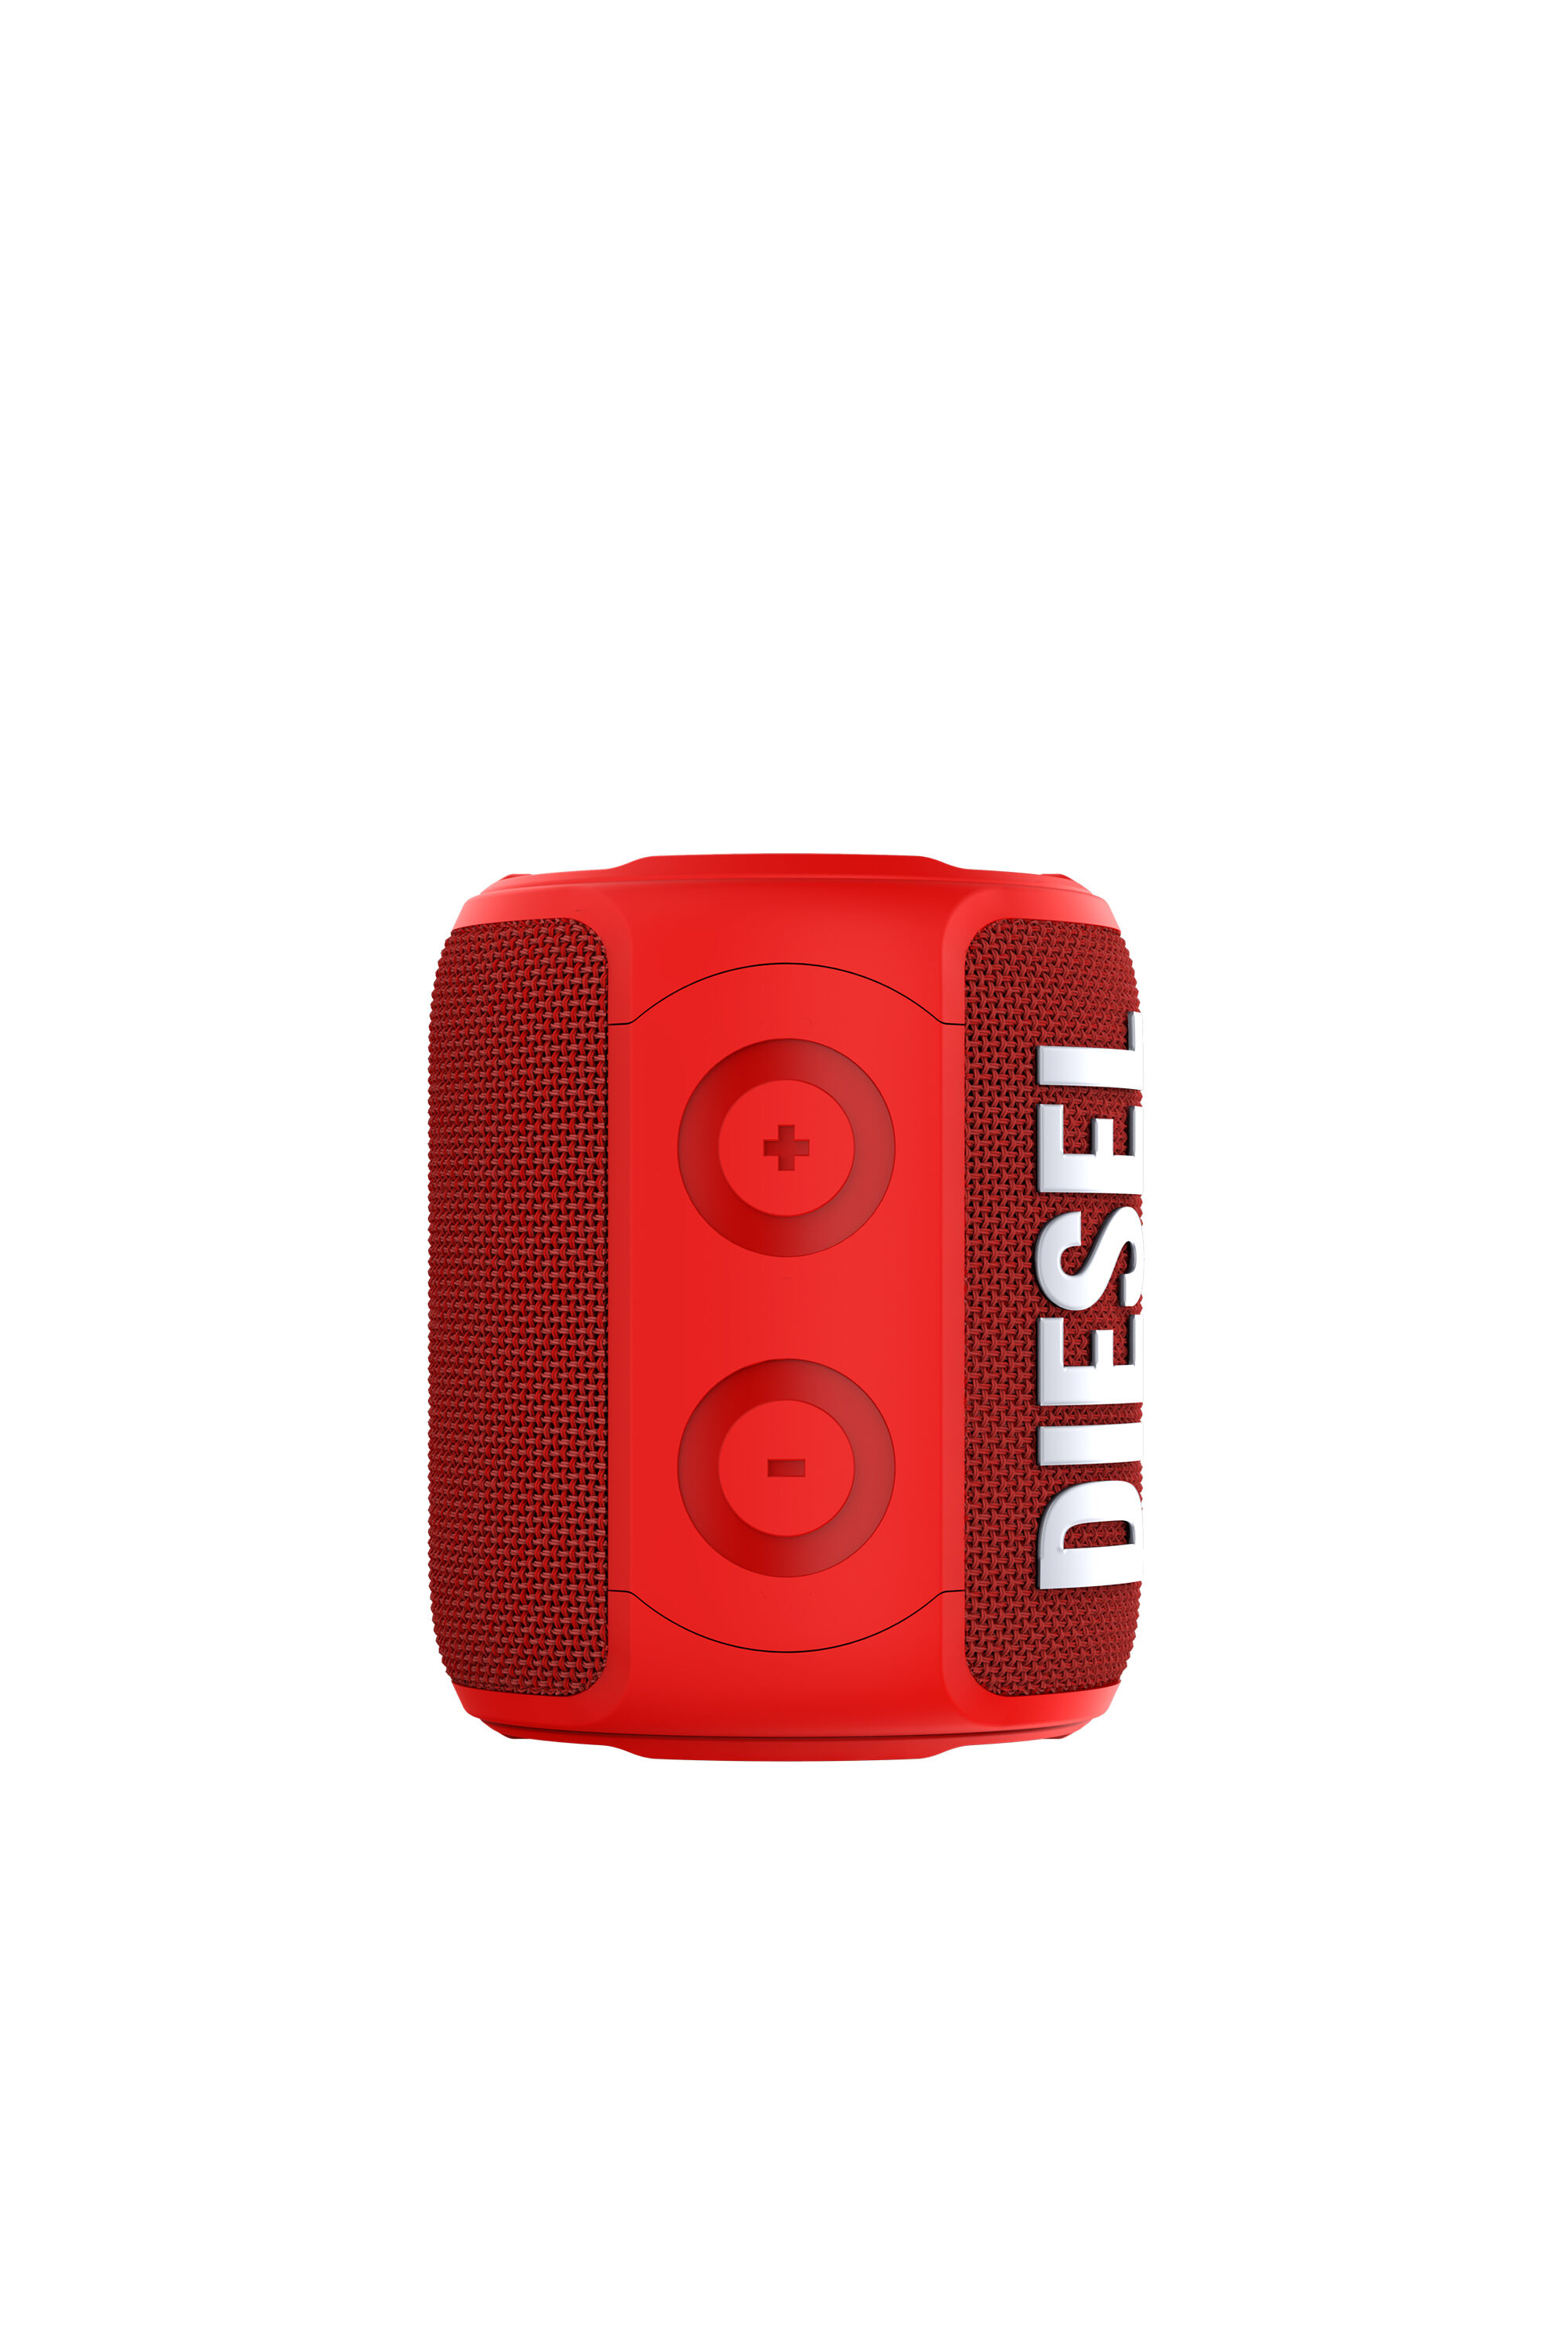 Diesel - 49351 BLUETOOTH SPEAKER, Unisex Wireless Speaker in Red - Image 1